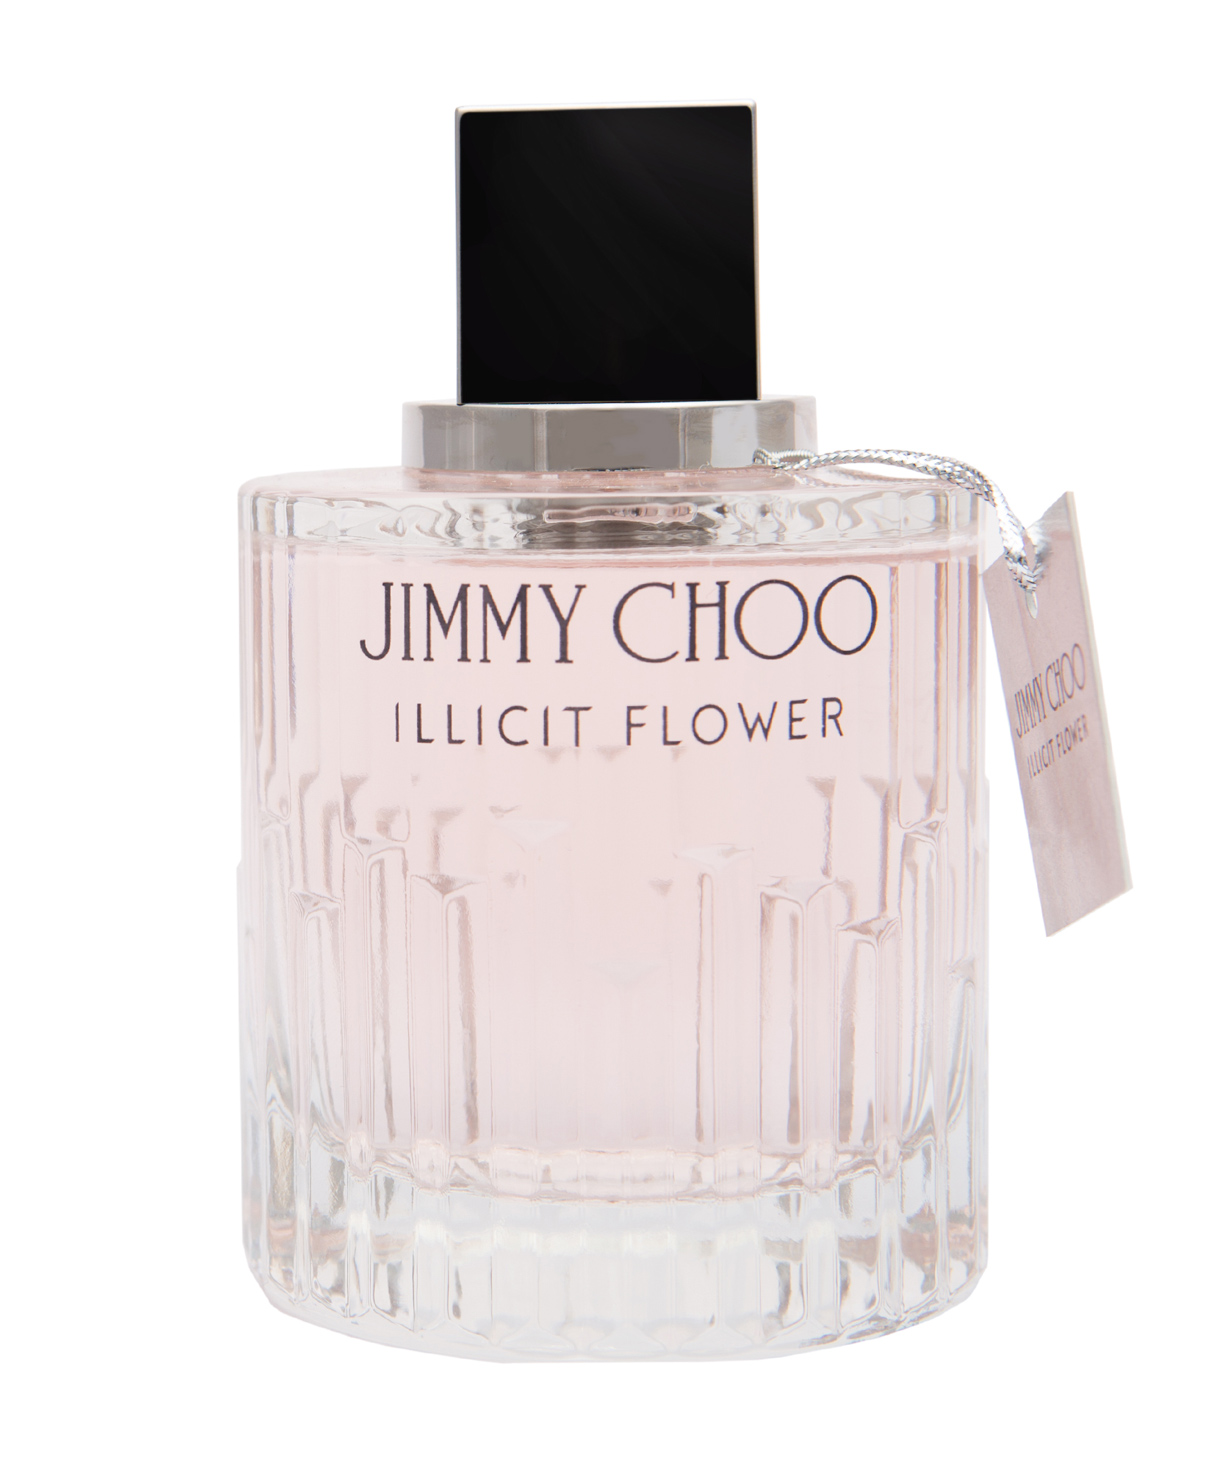 Perfume «Jimmy Choo» Illicit Flower, for women, 100 ml